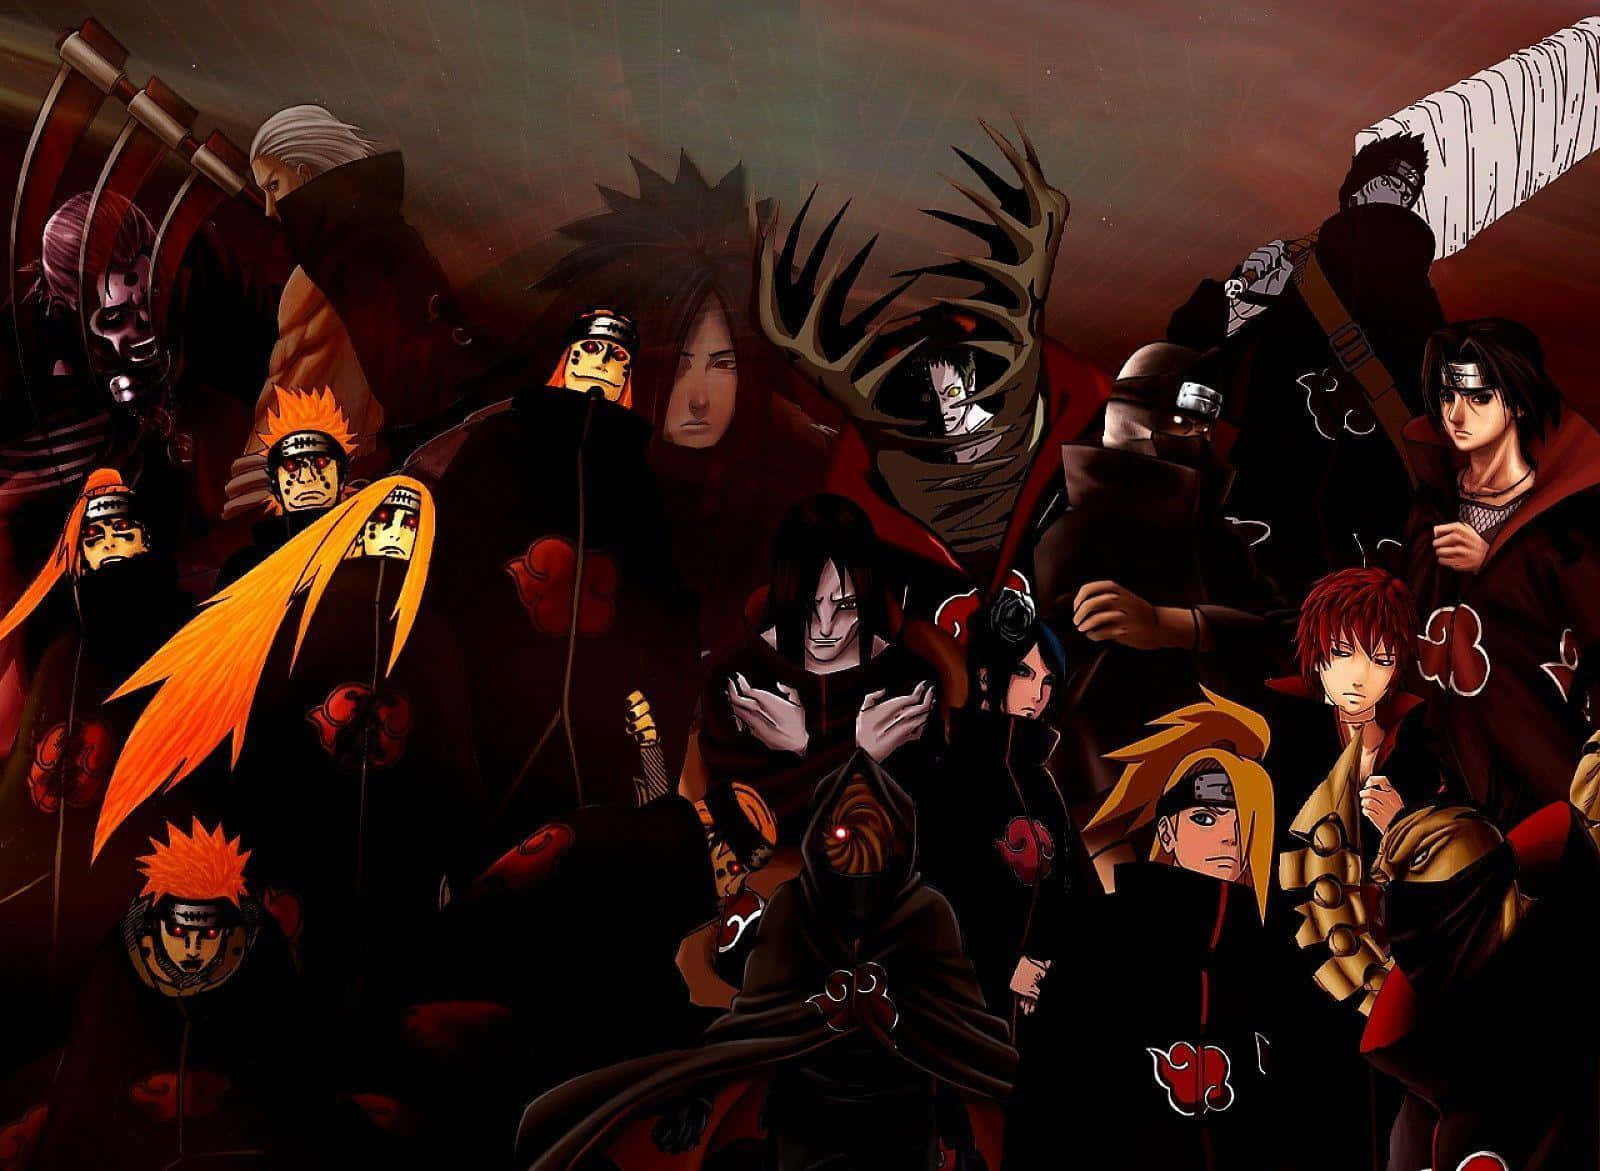 Gathering of the Akatsuki - Elite Members of the Hidden Cloud Village" Wallpaper